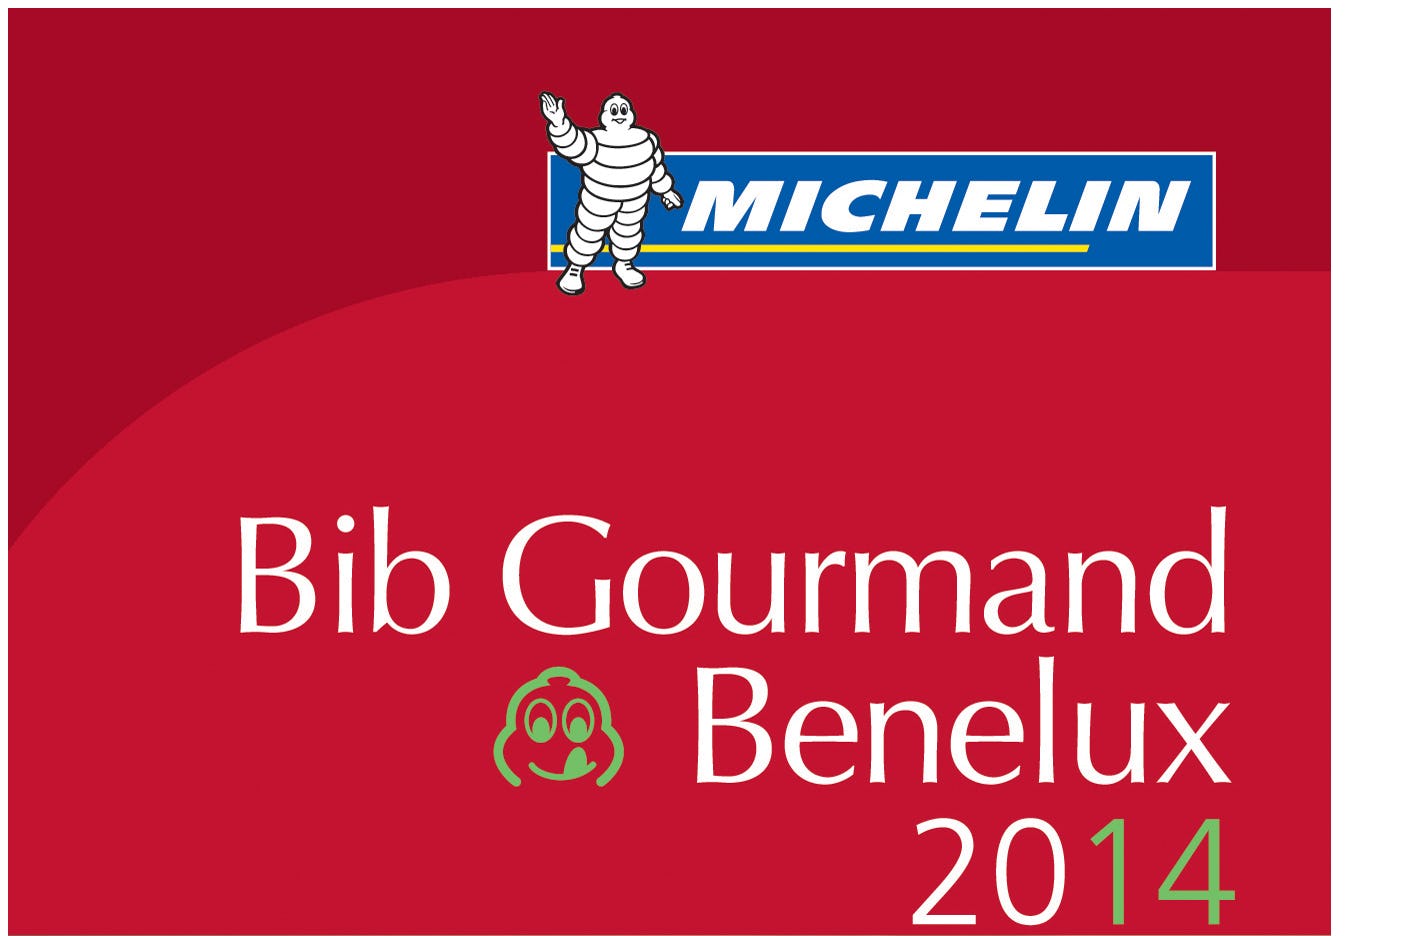 Bib Gourmands 2014: 15 nieuwe namen